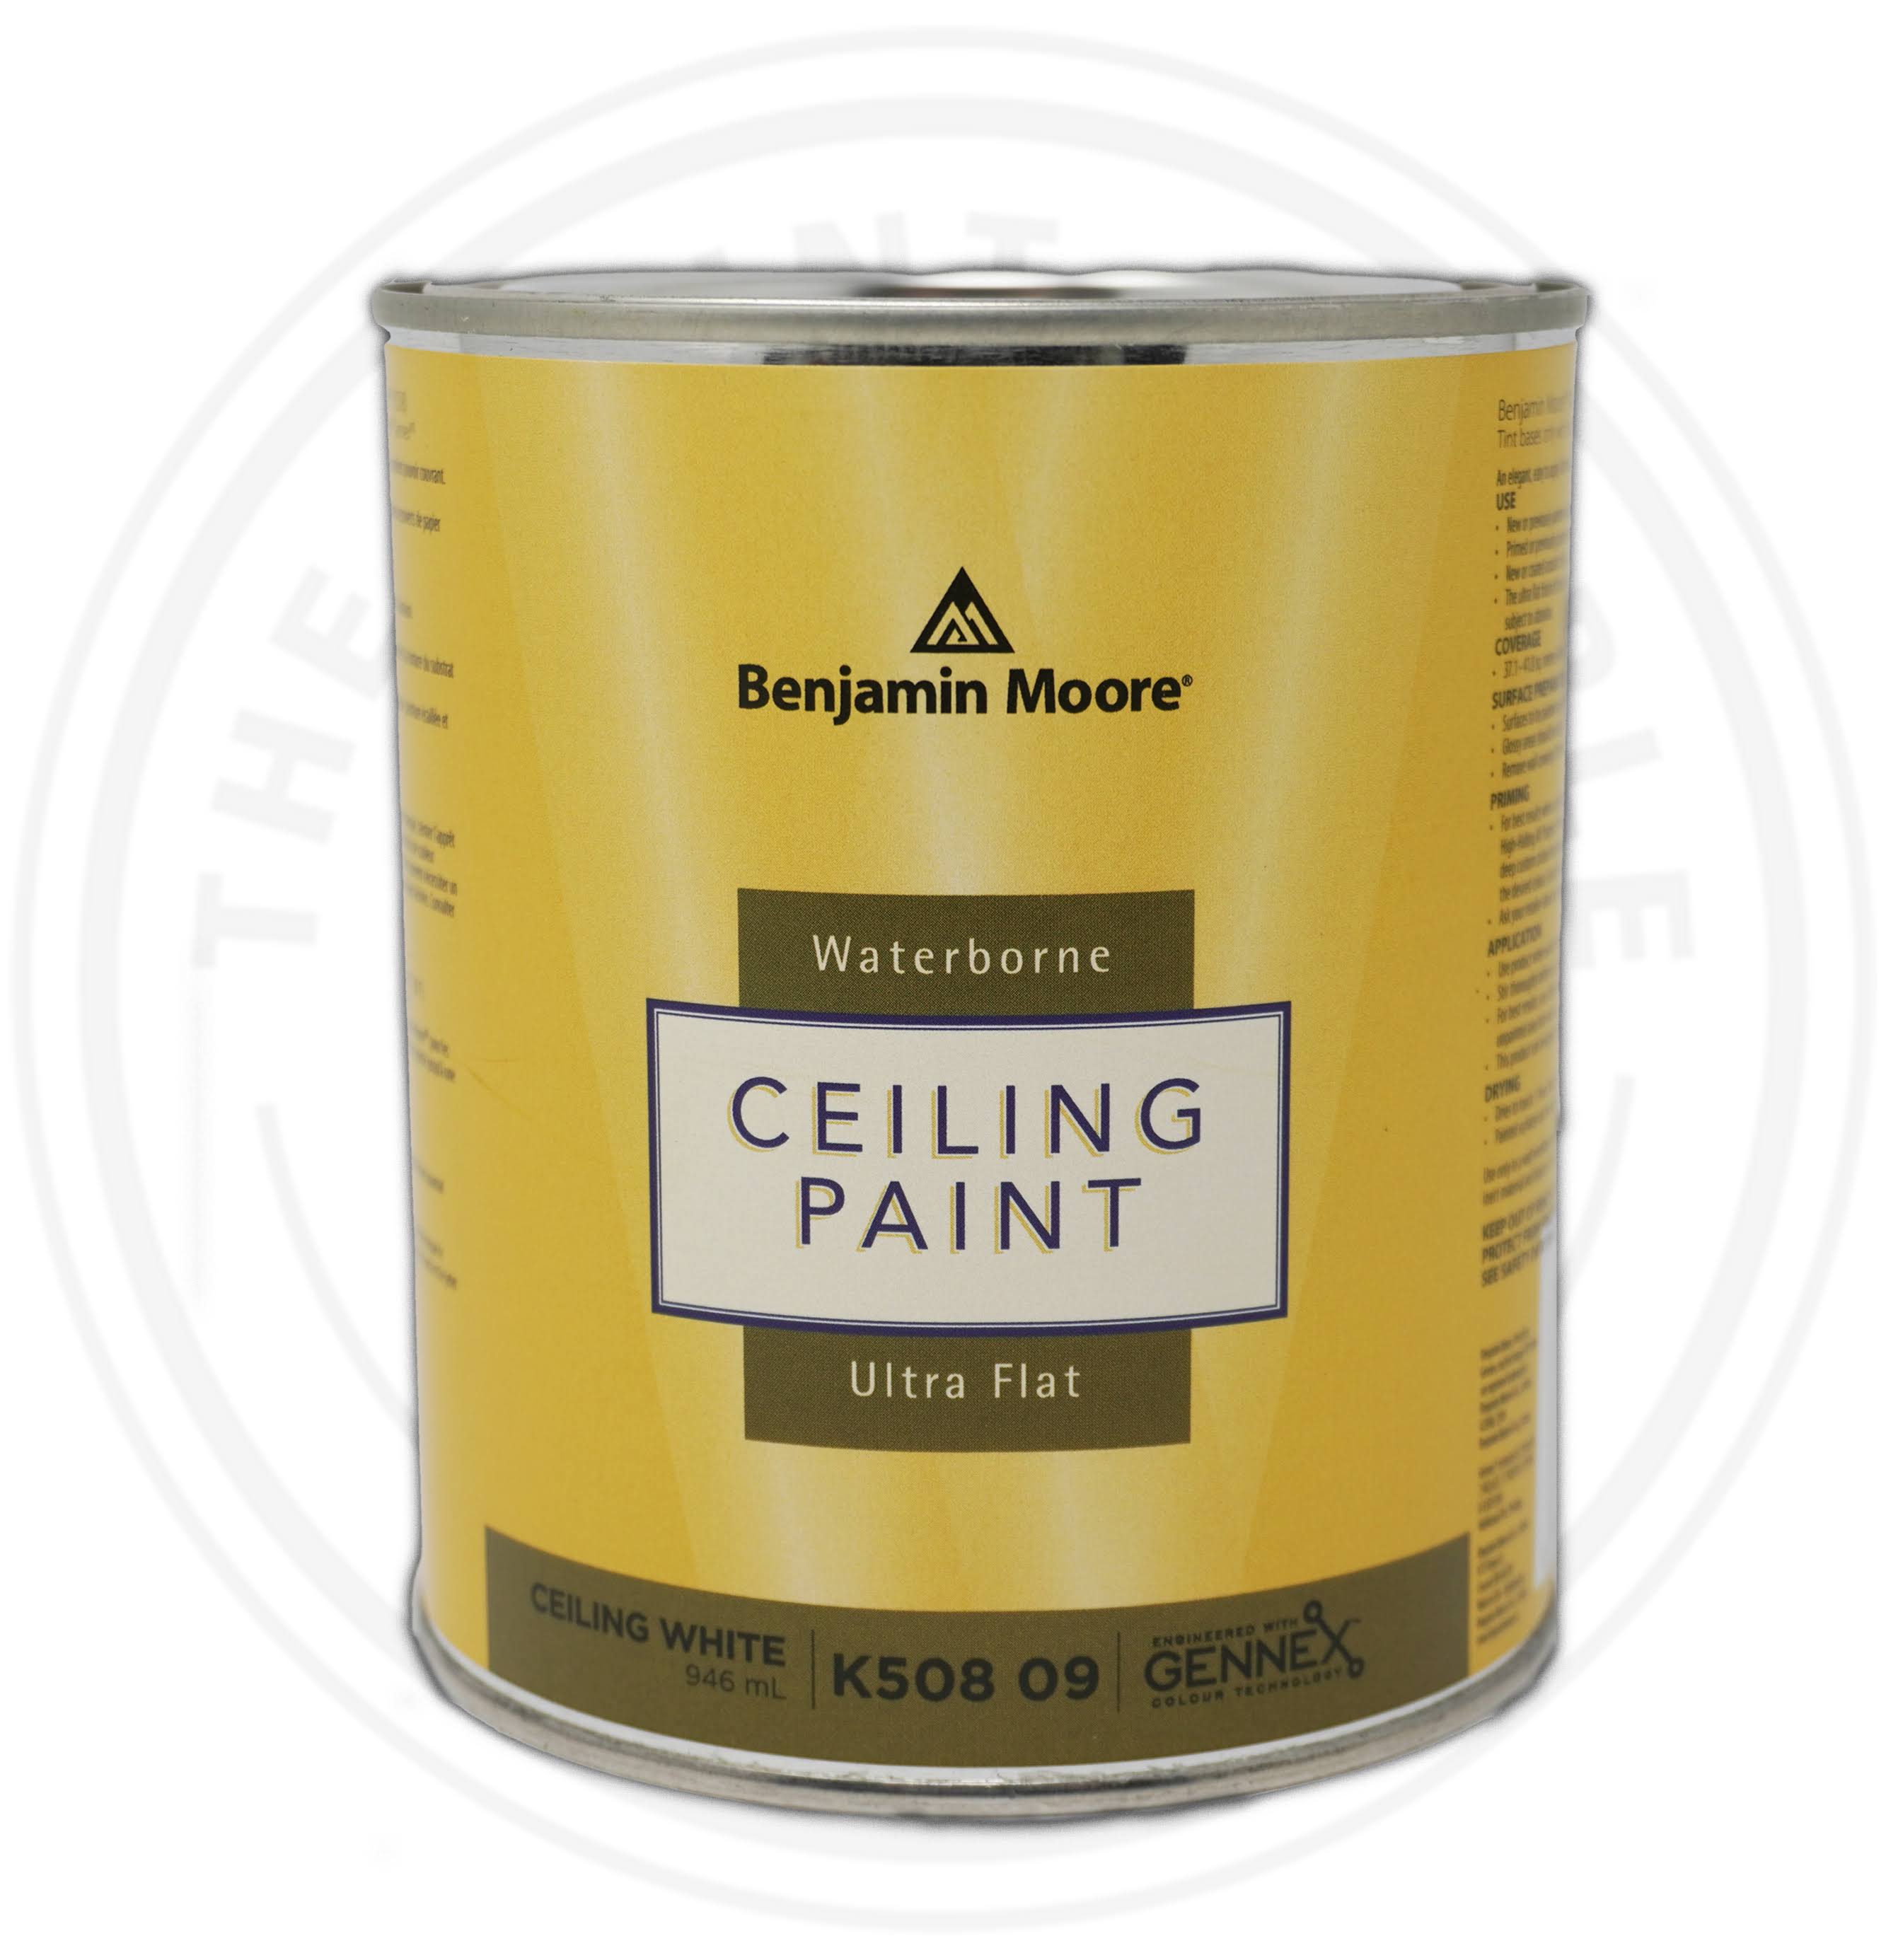 Benjamin Moore Waterborne Ceiling Paint - 1 Quart